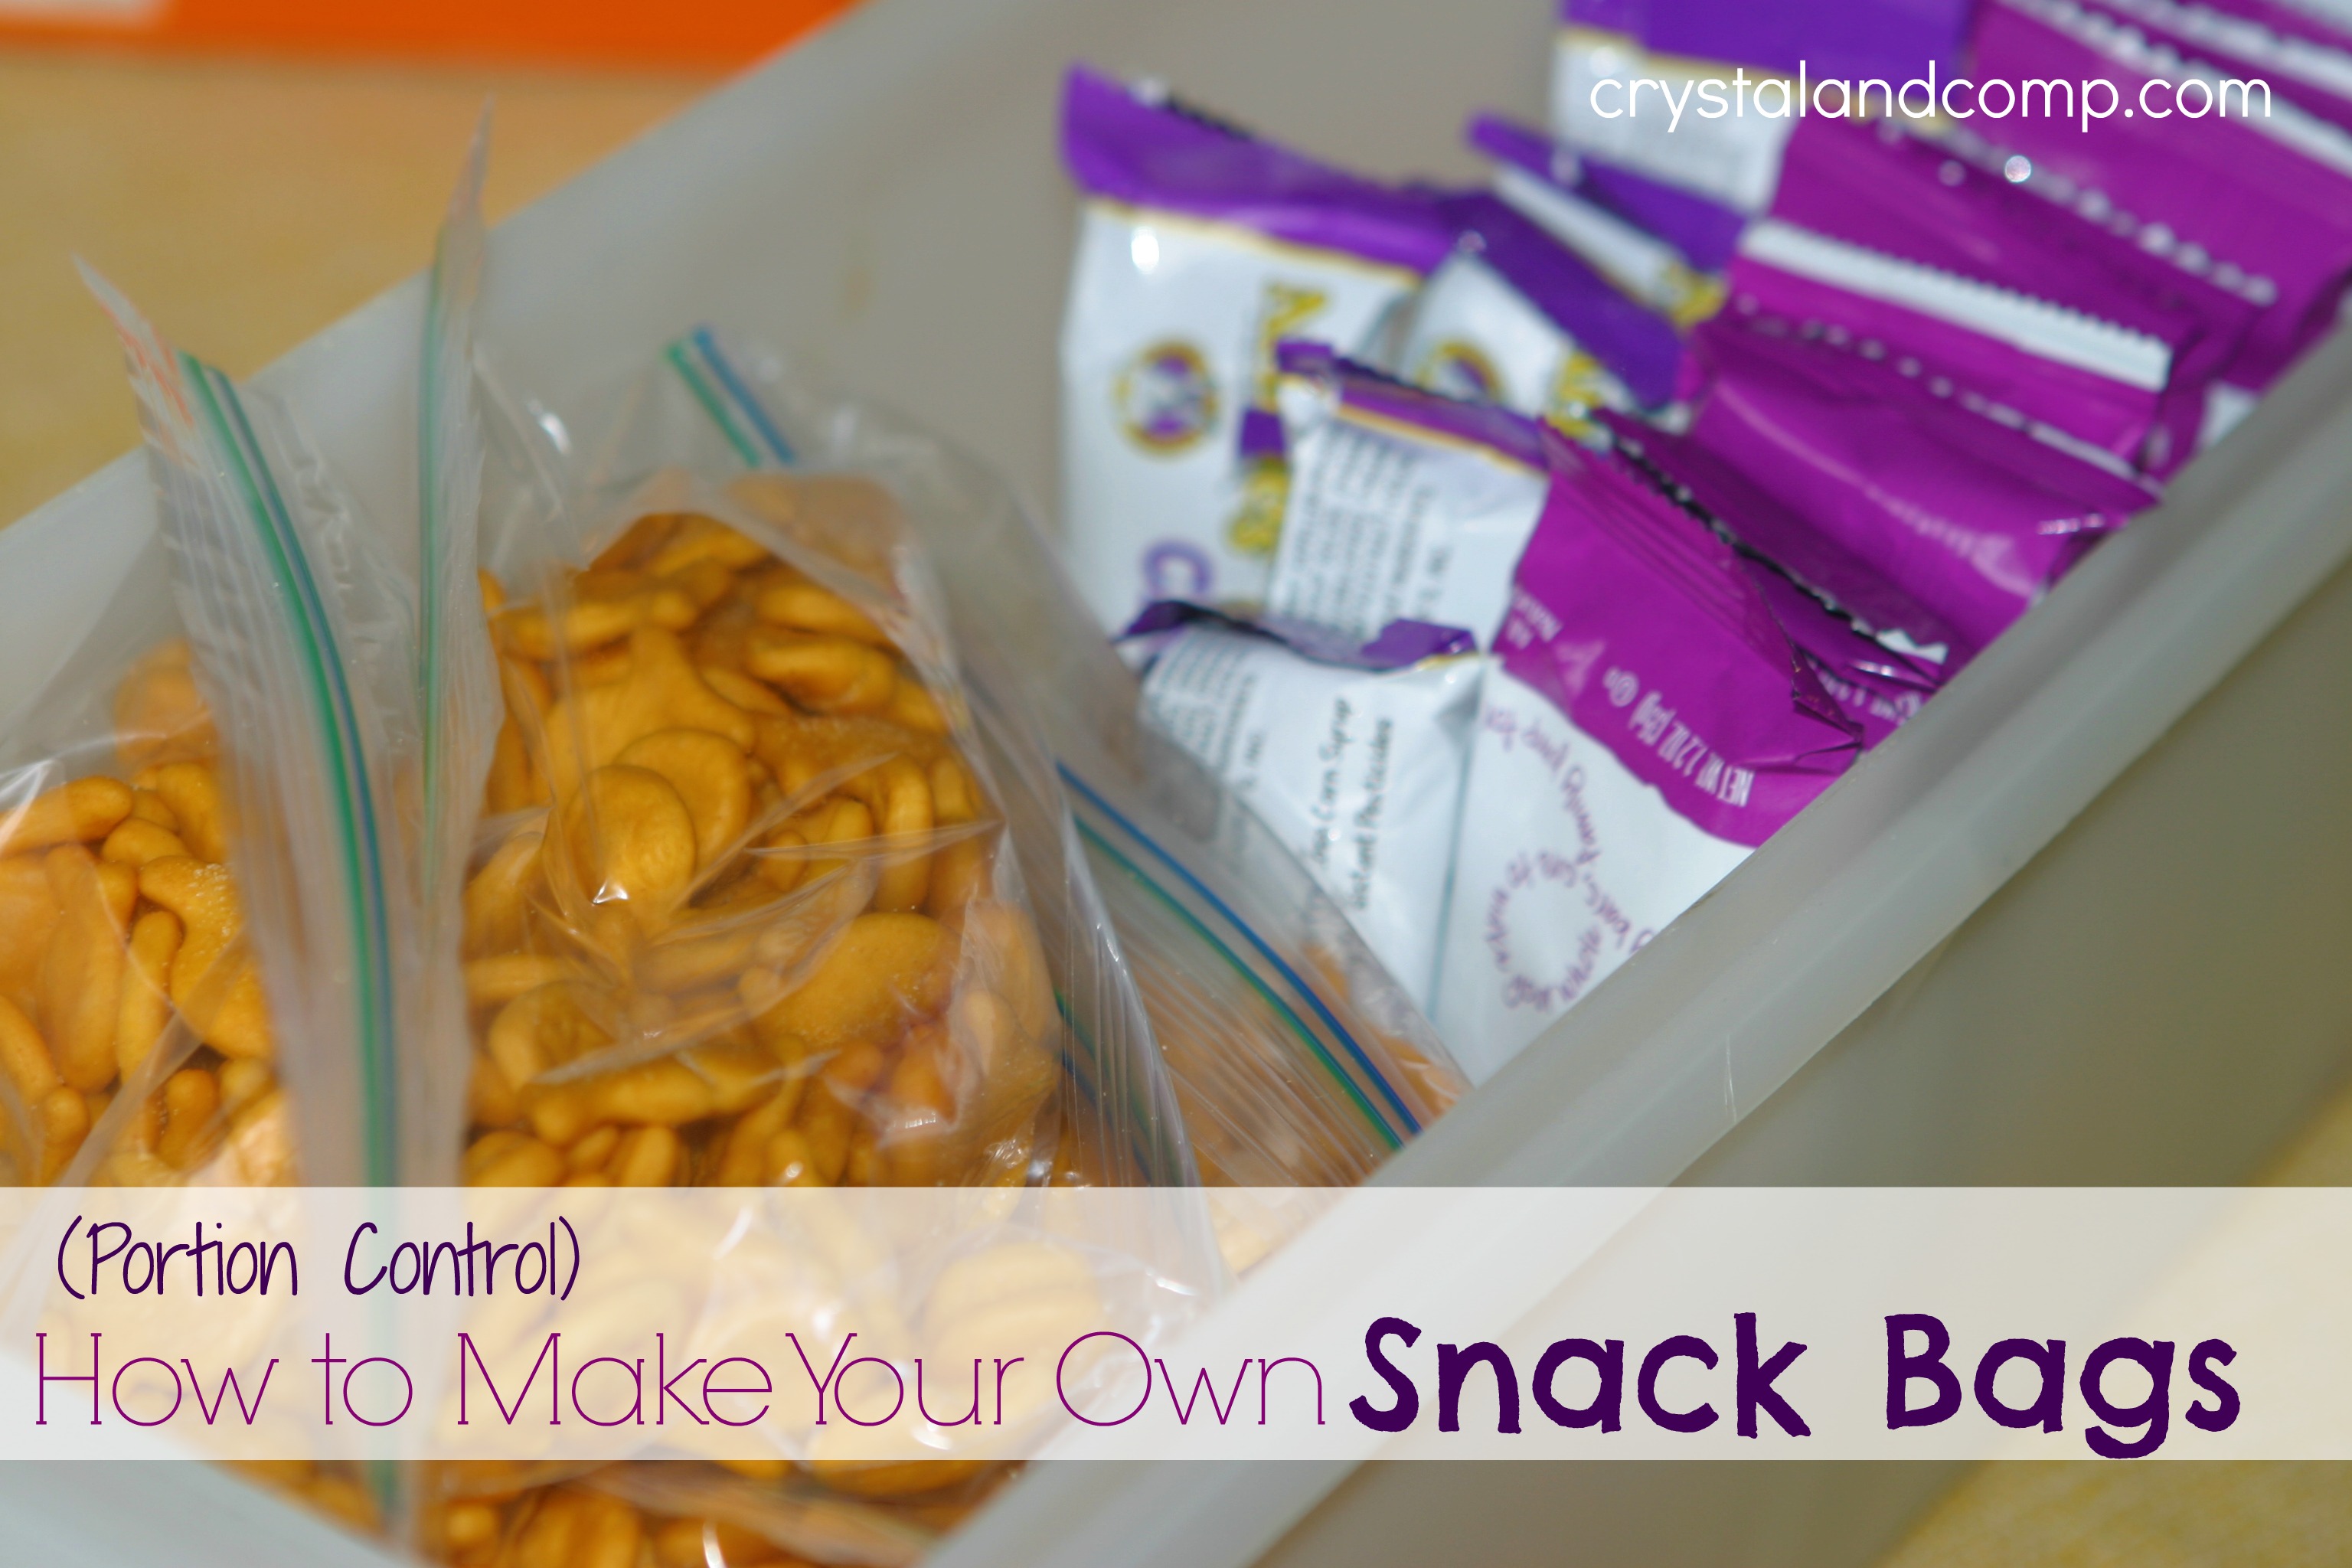 https://crystalandcomp.com/wp-content/uploads/2013/09/snacks-for-kids-make-your-own-snack-bags.jpg